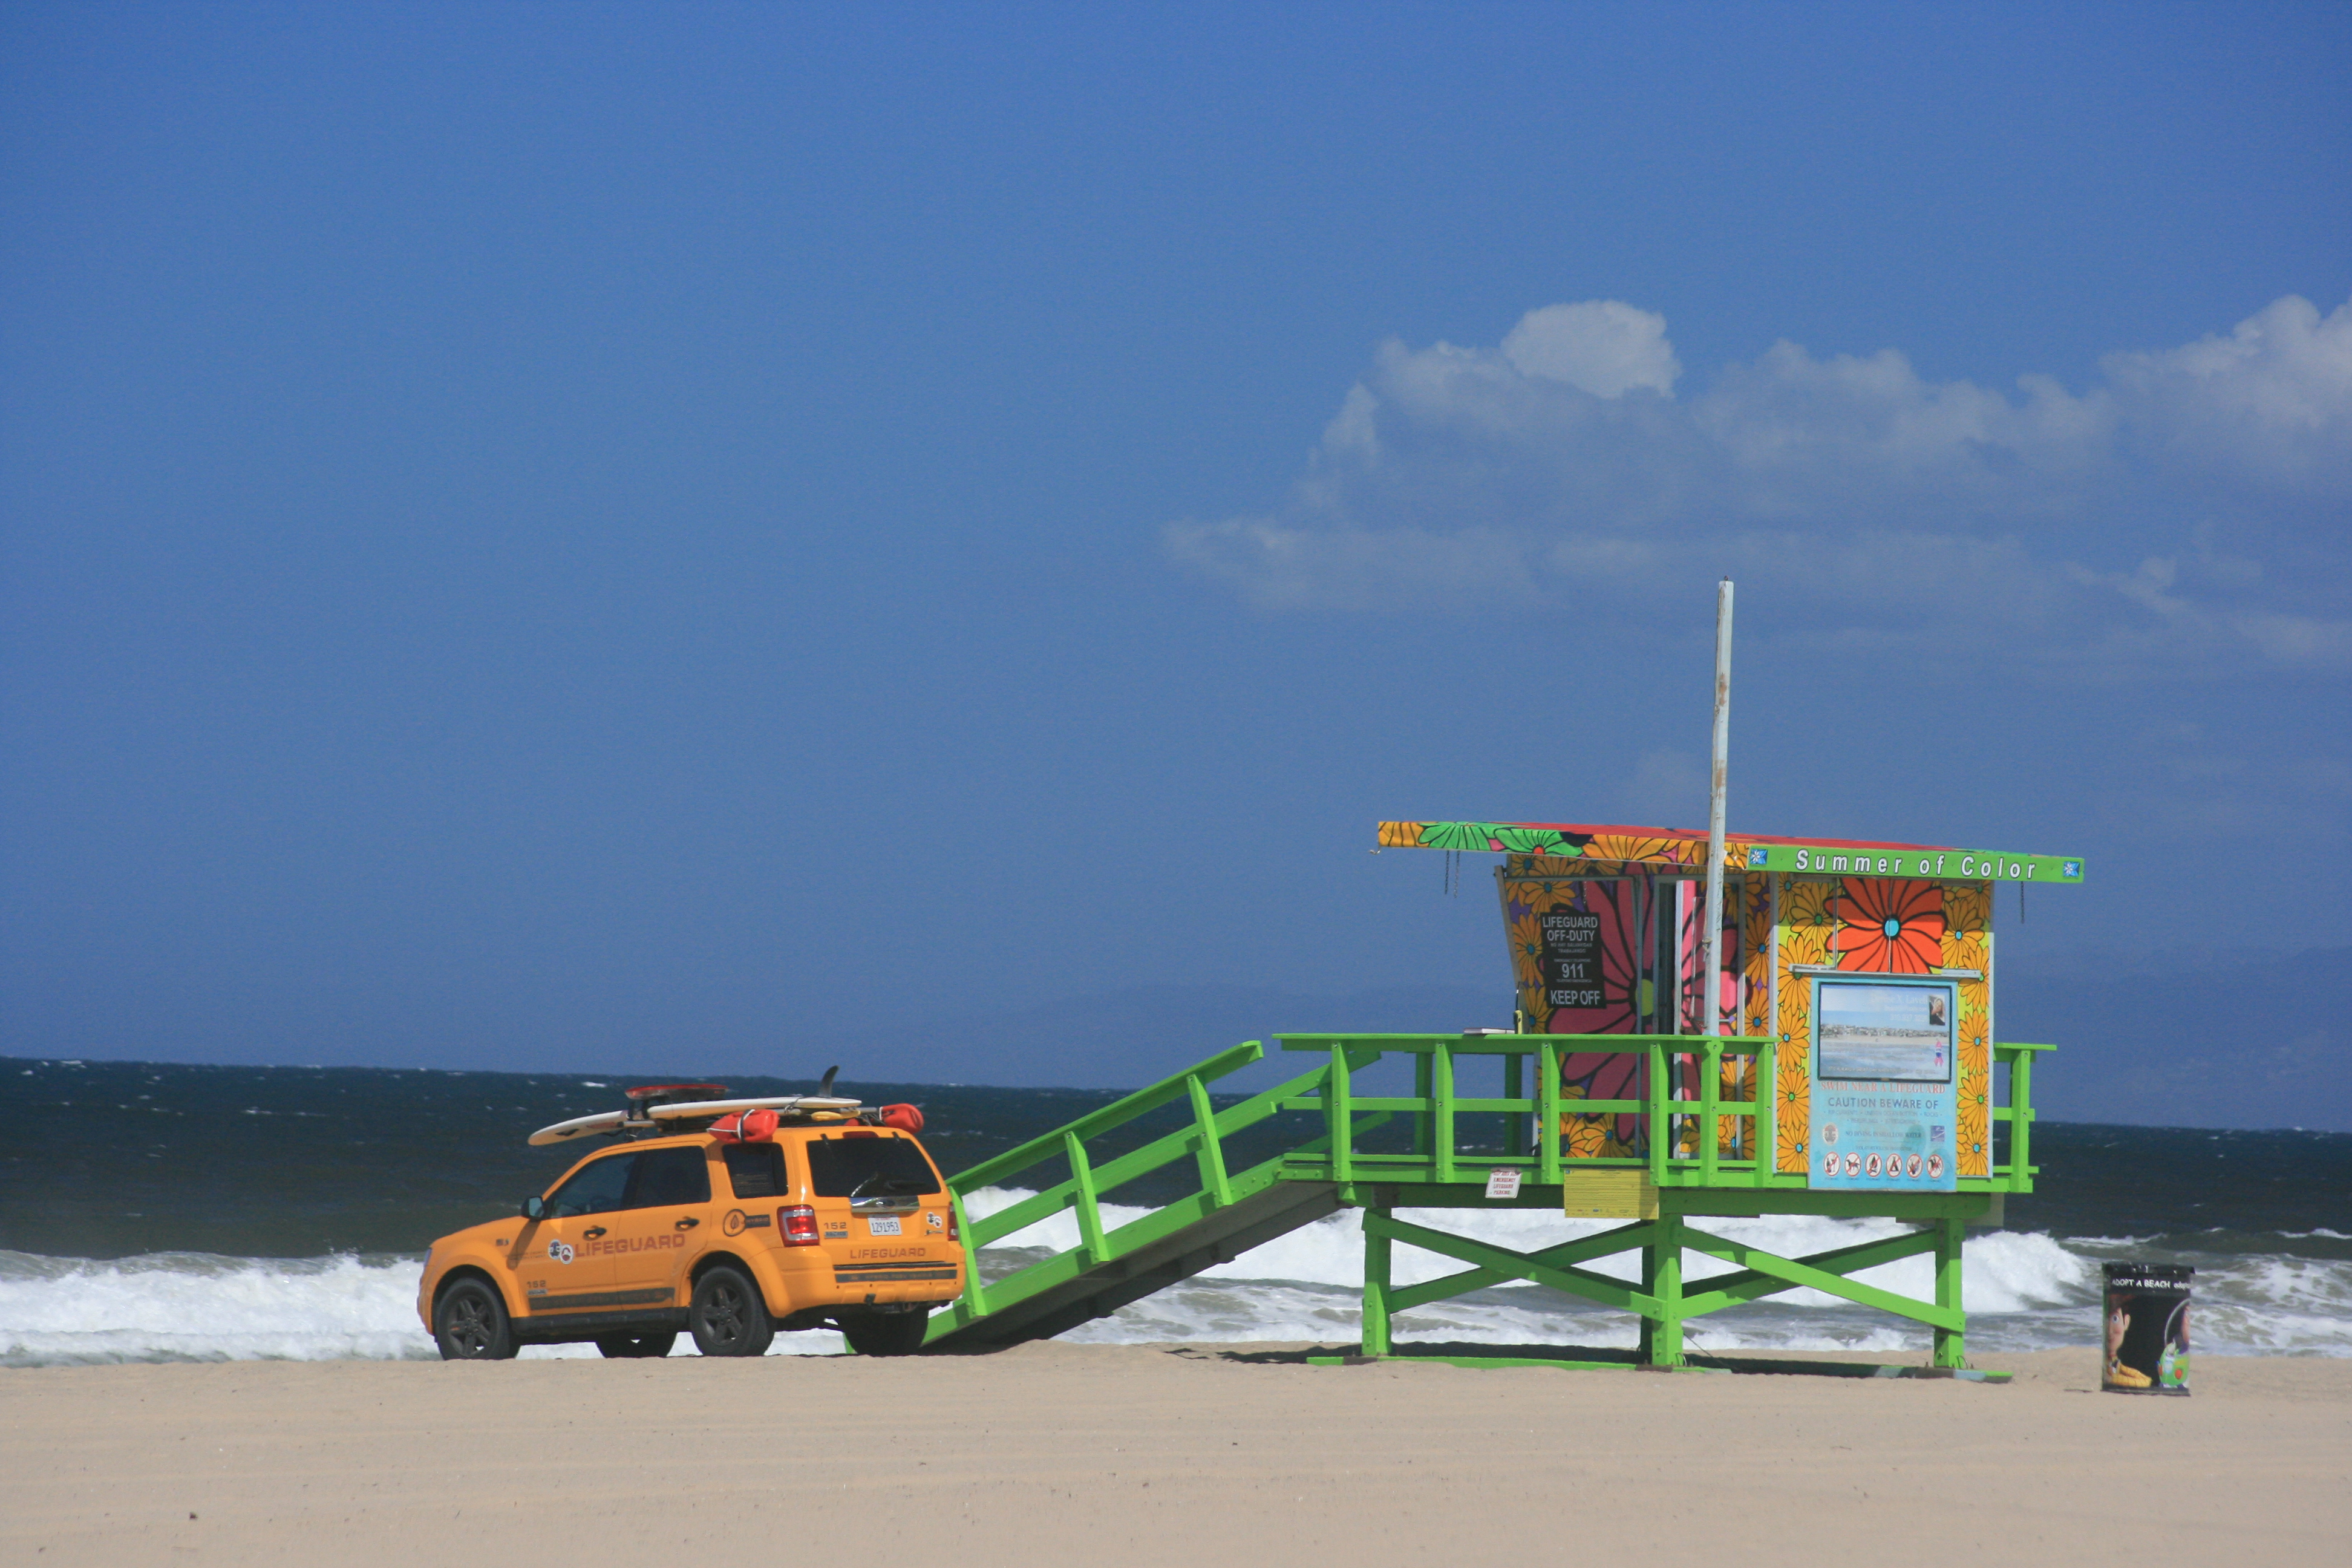 File:Lifeguard station on Manhattan Beach.jpg - Wikimedia Commons